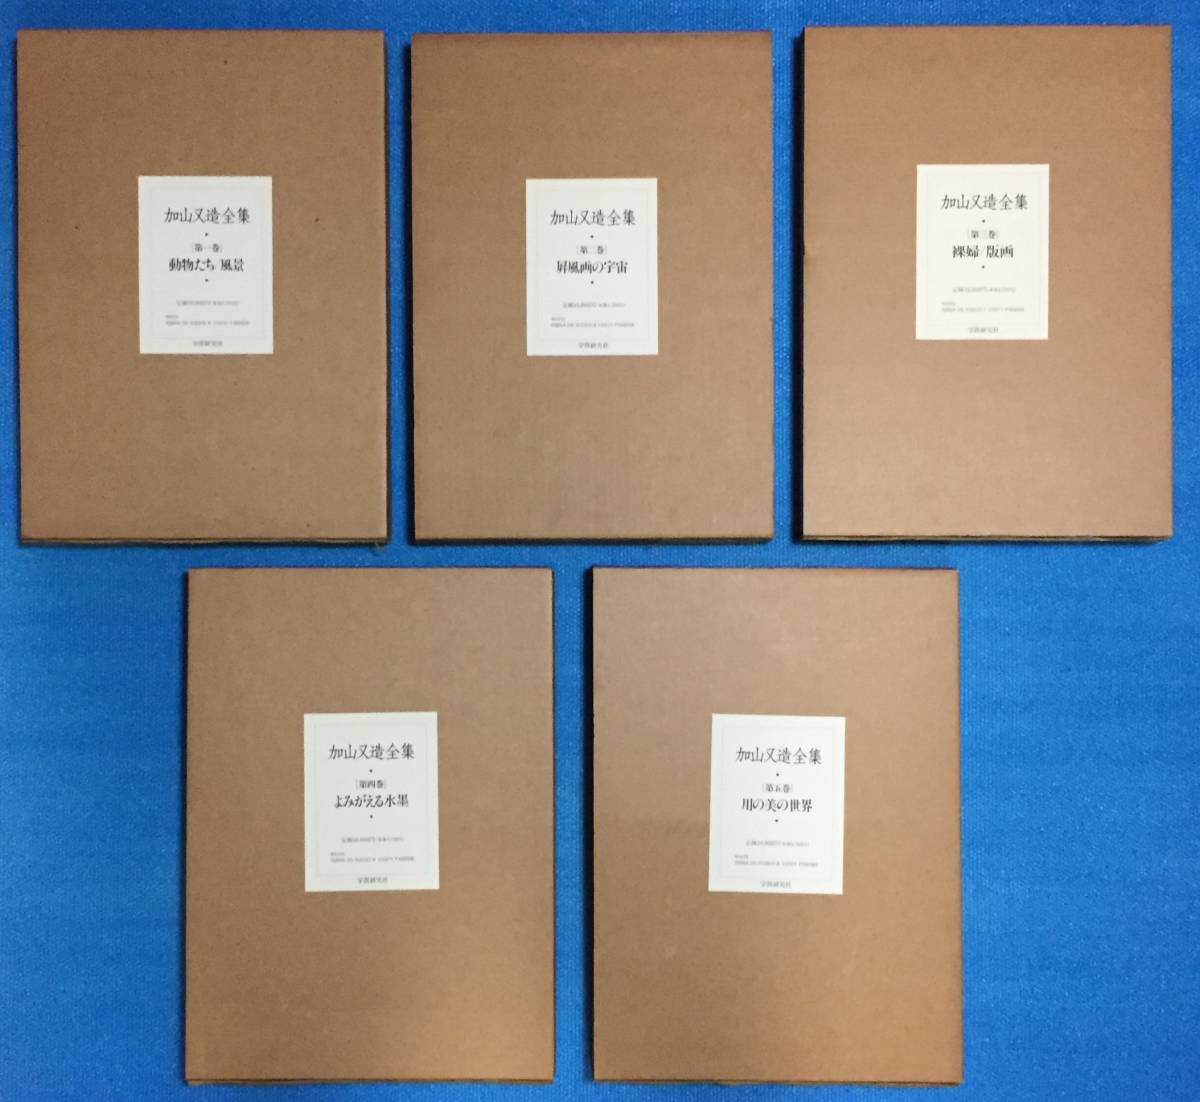 加山又造全集・全５巻 学習研究社 1990年4月第1巻発行から全5巻セット